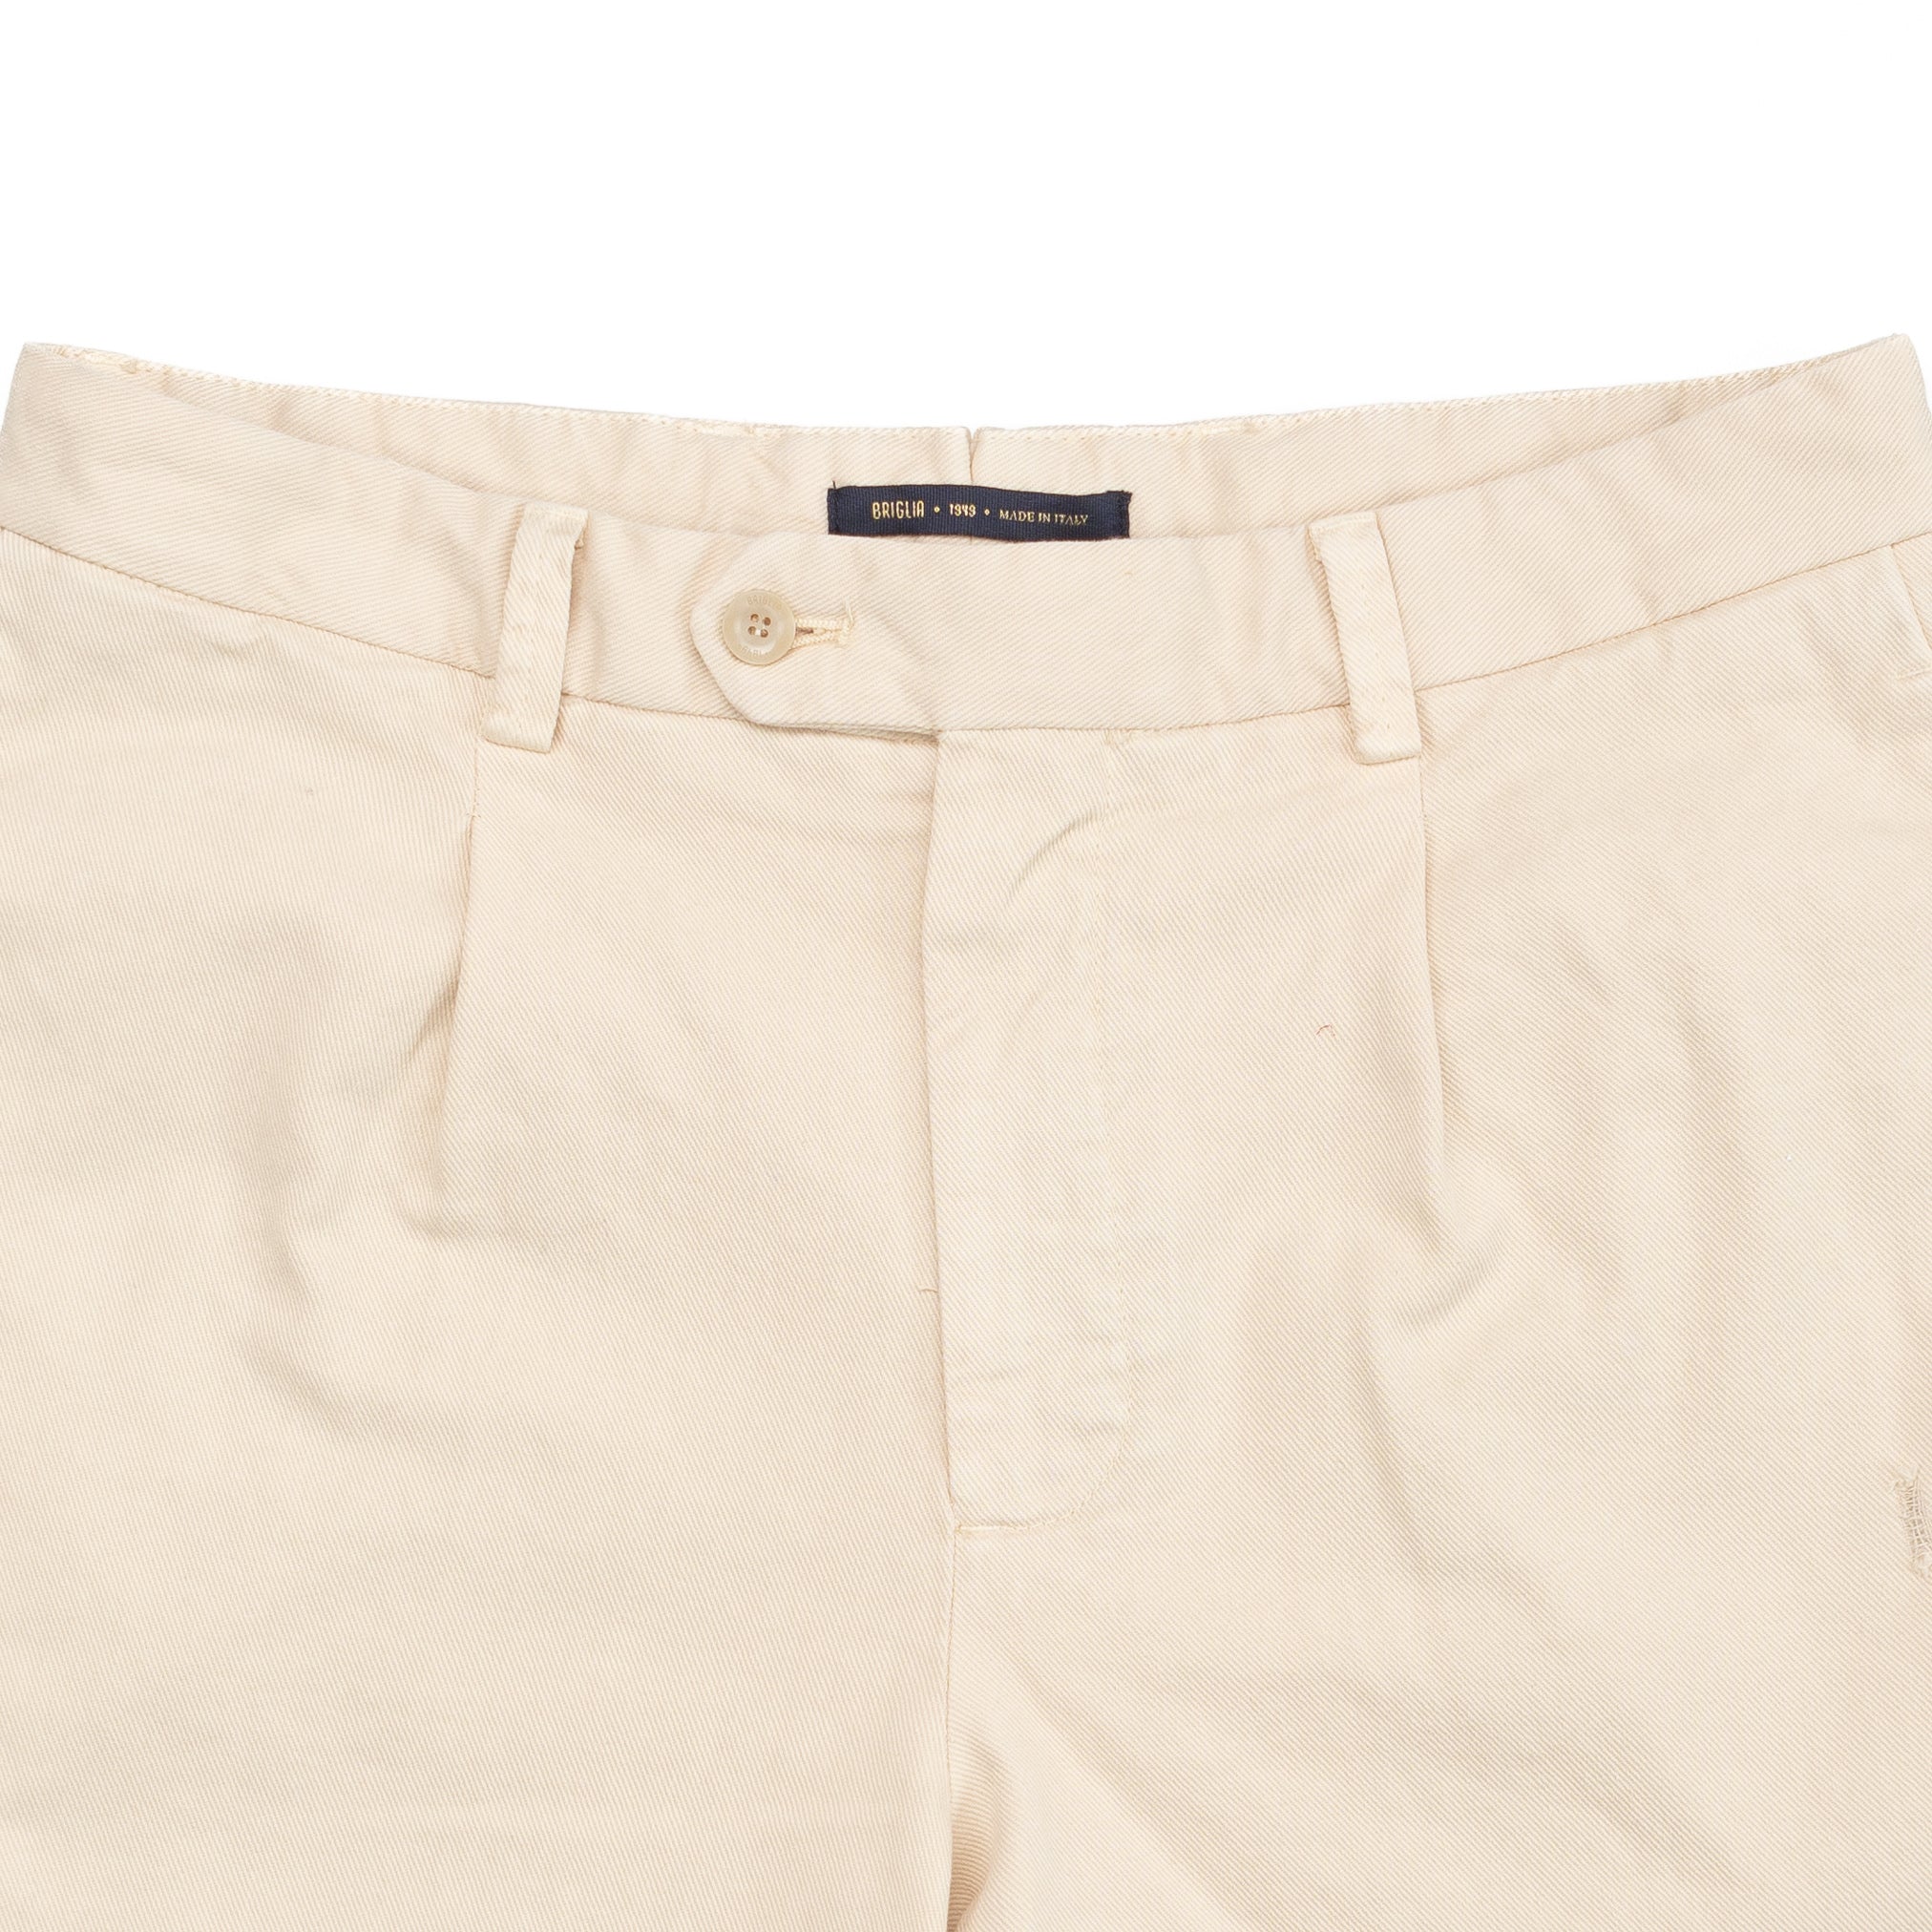 Gurkadt Shorts in Off White